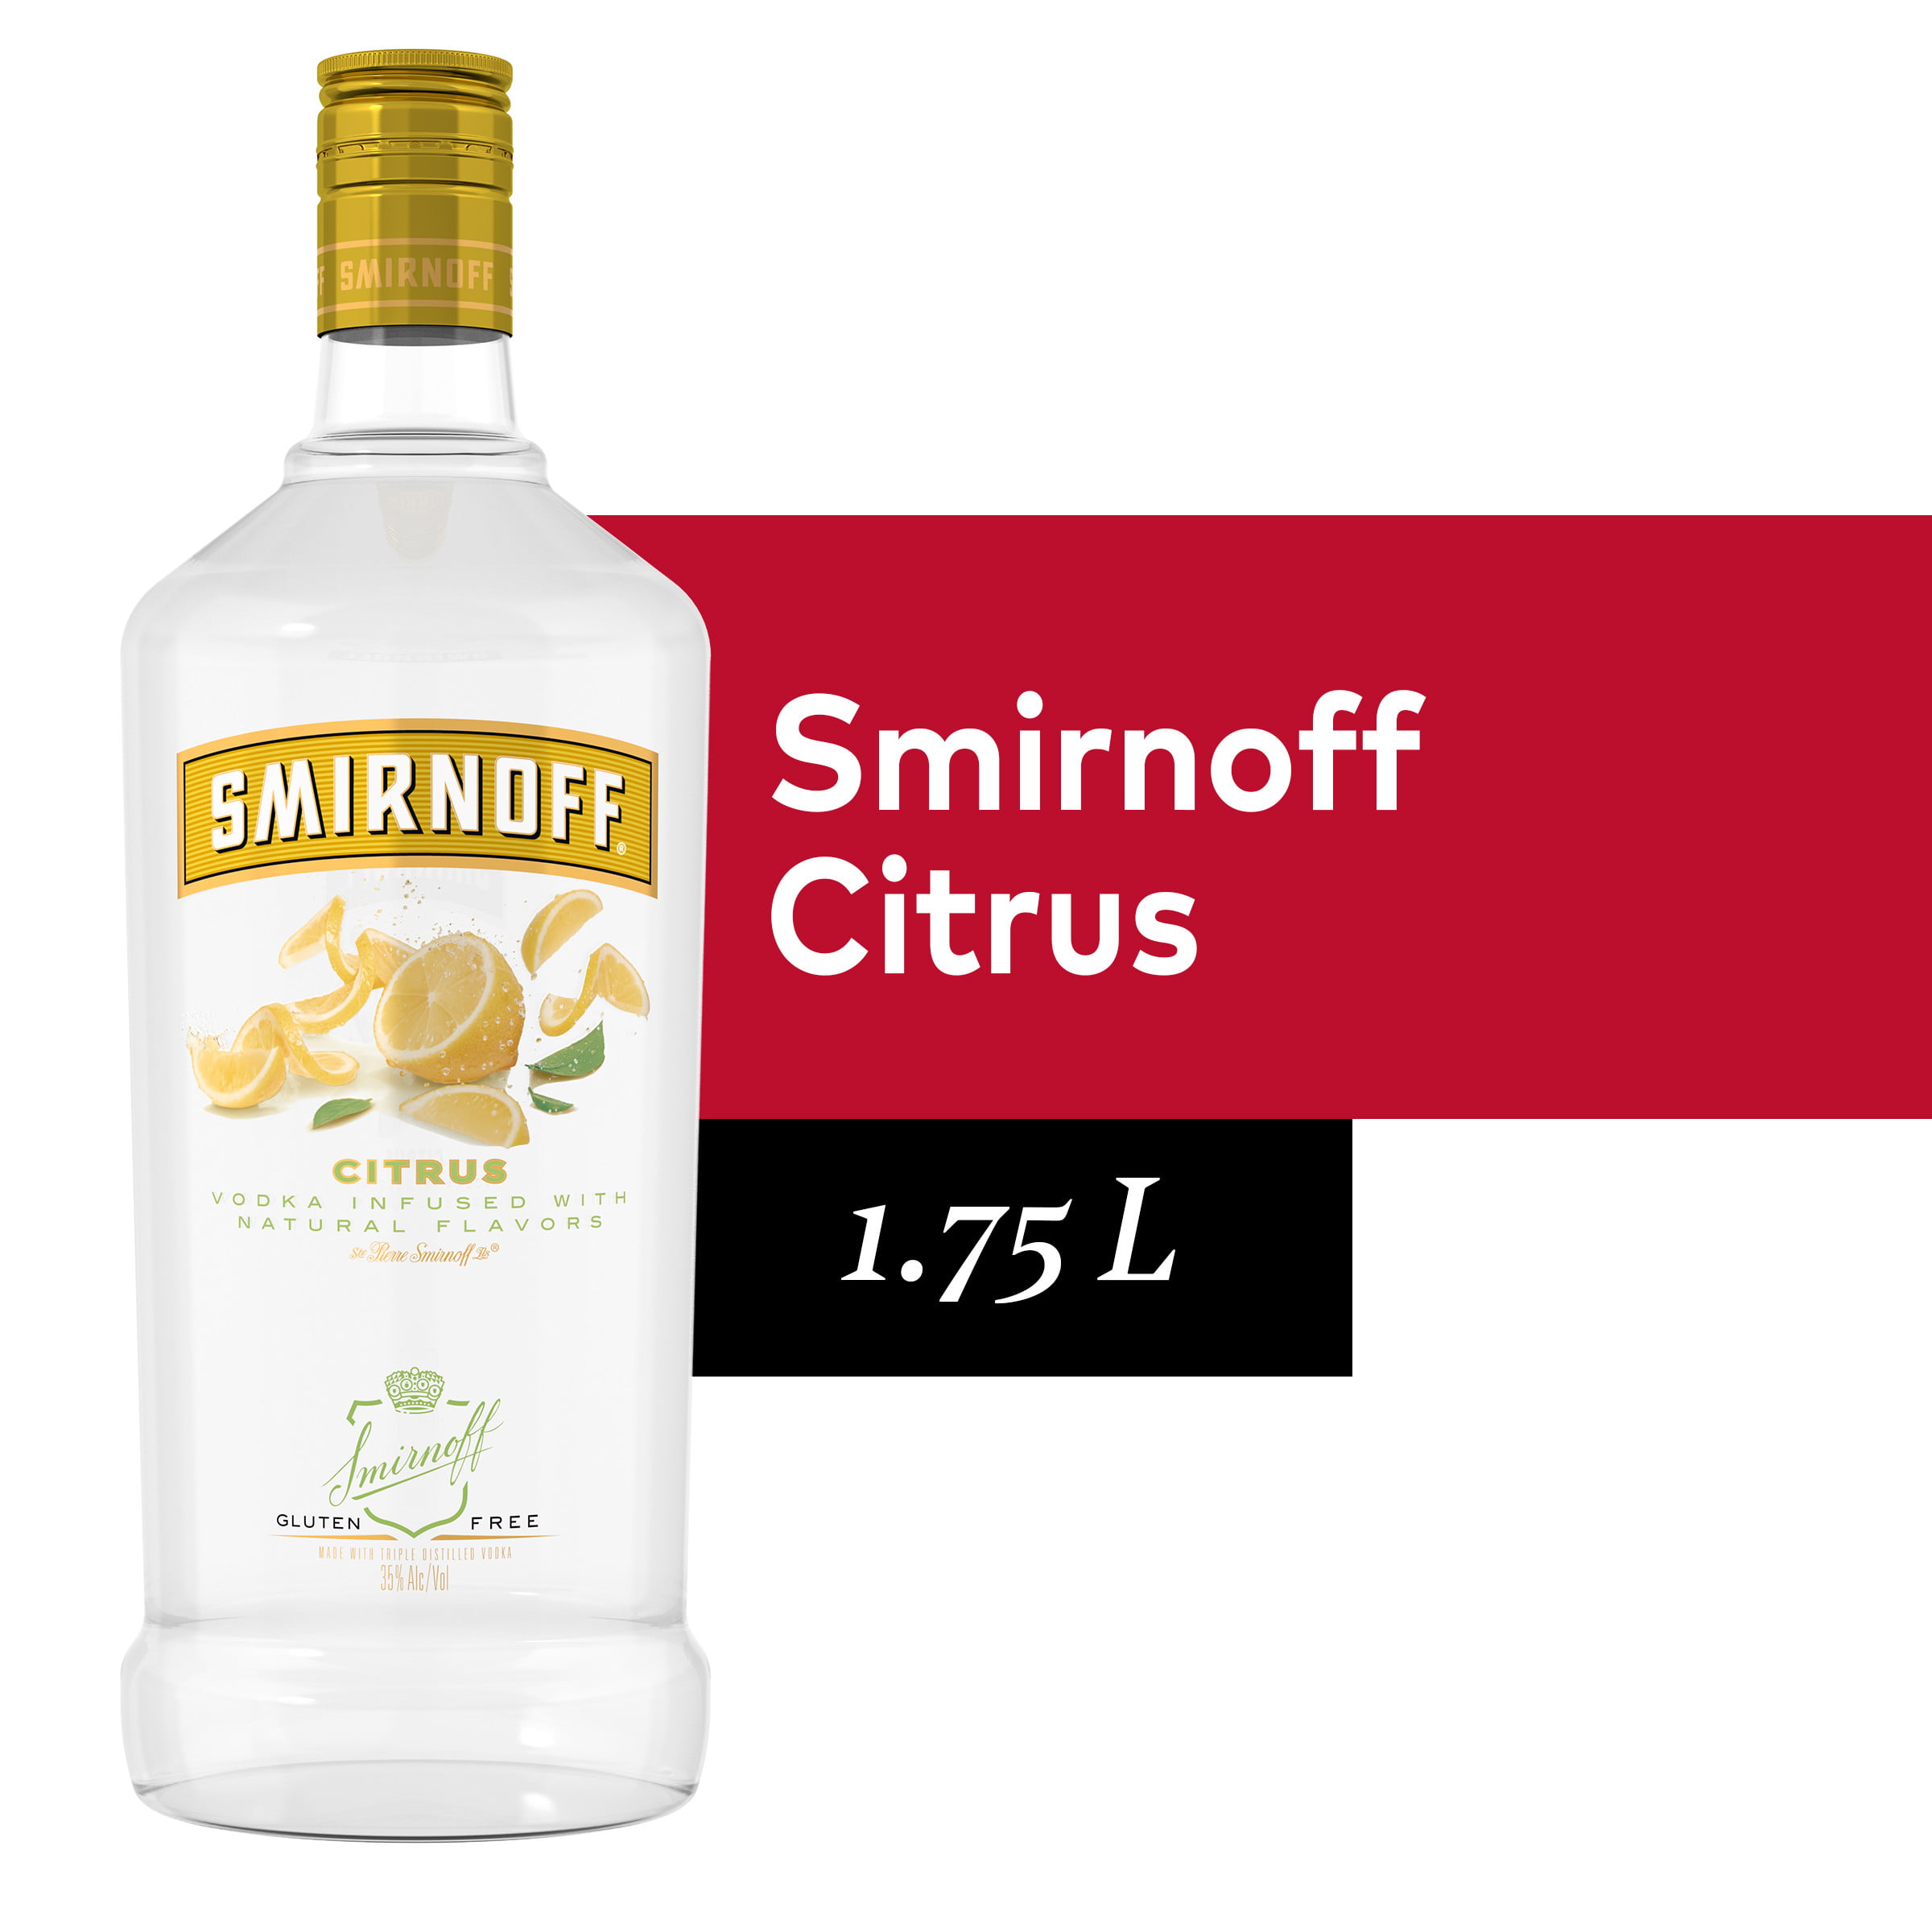 Smirnoff Citrus (Vodka Infused With Natural Flavors) - 1.75 L Bottle ...